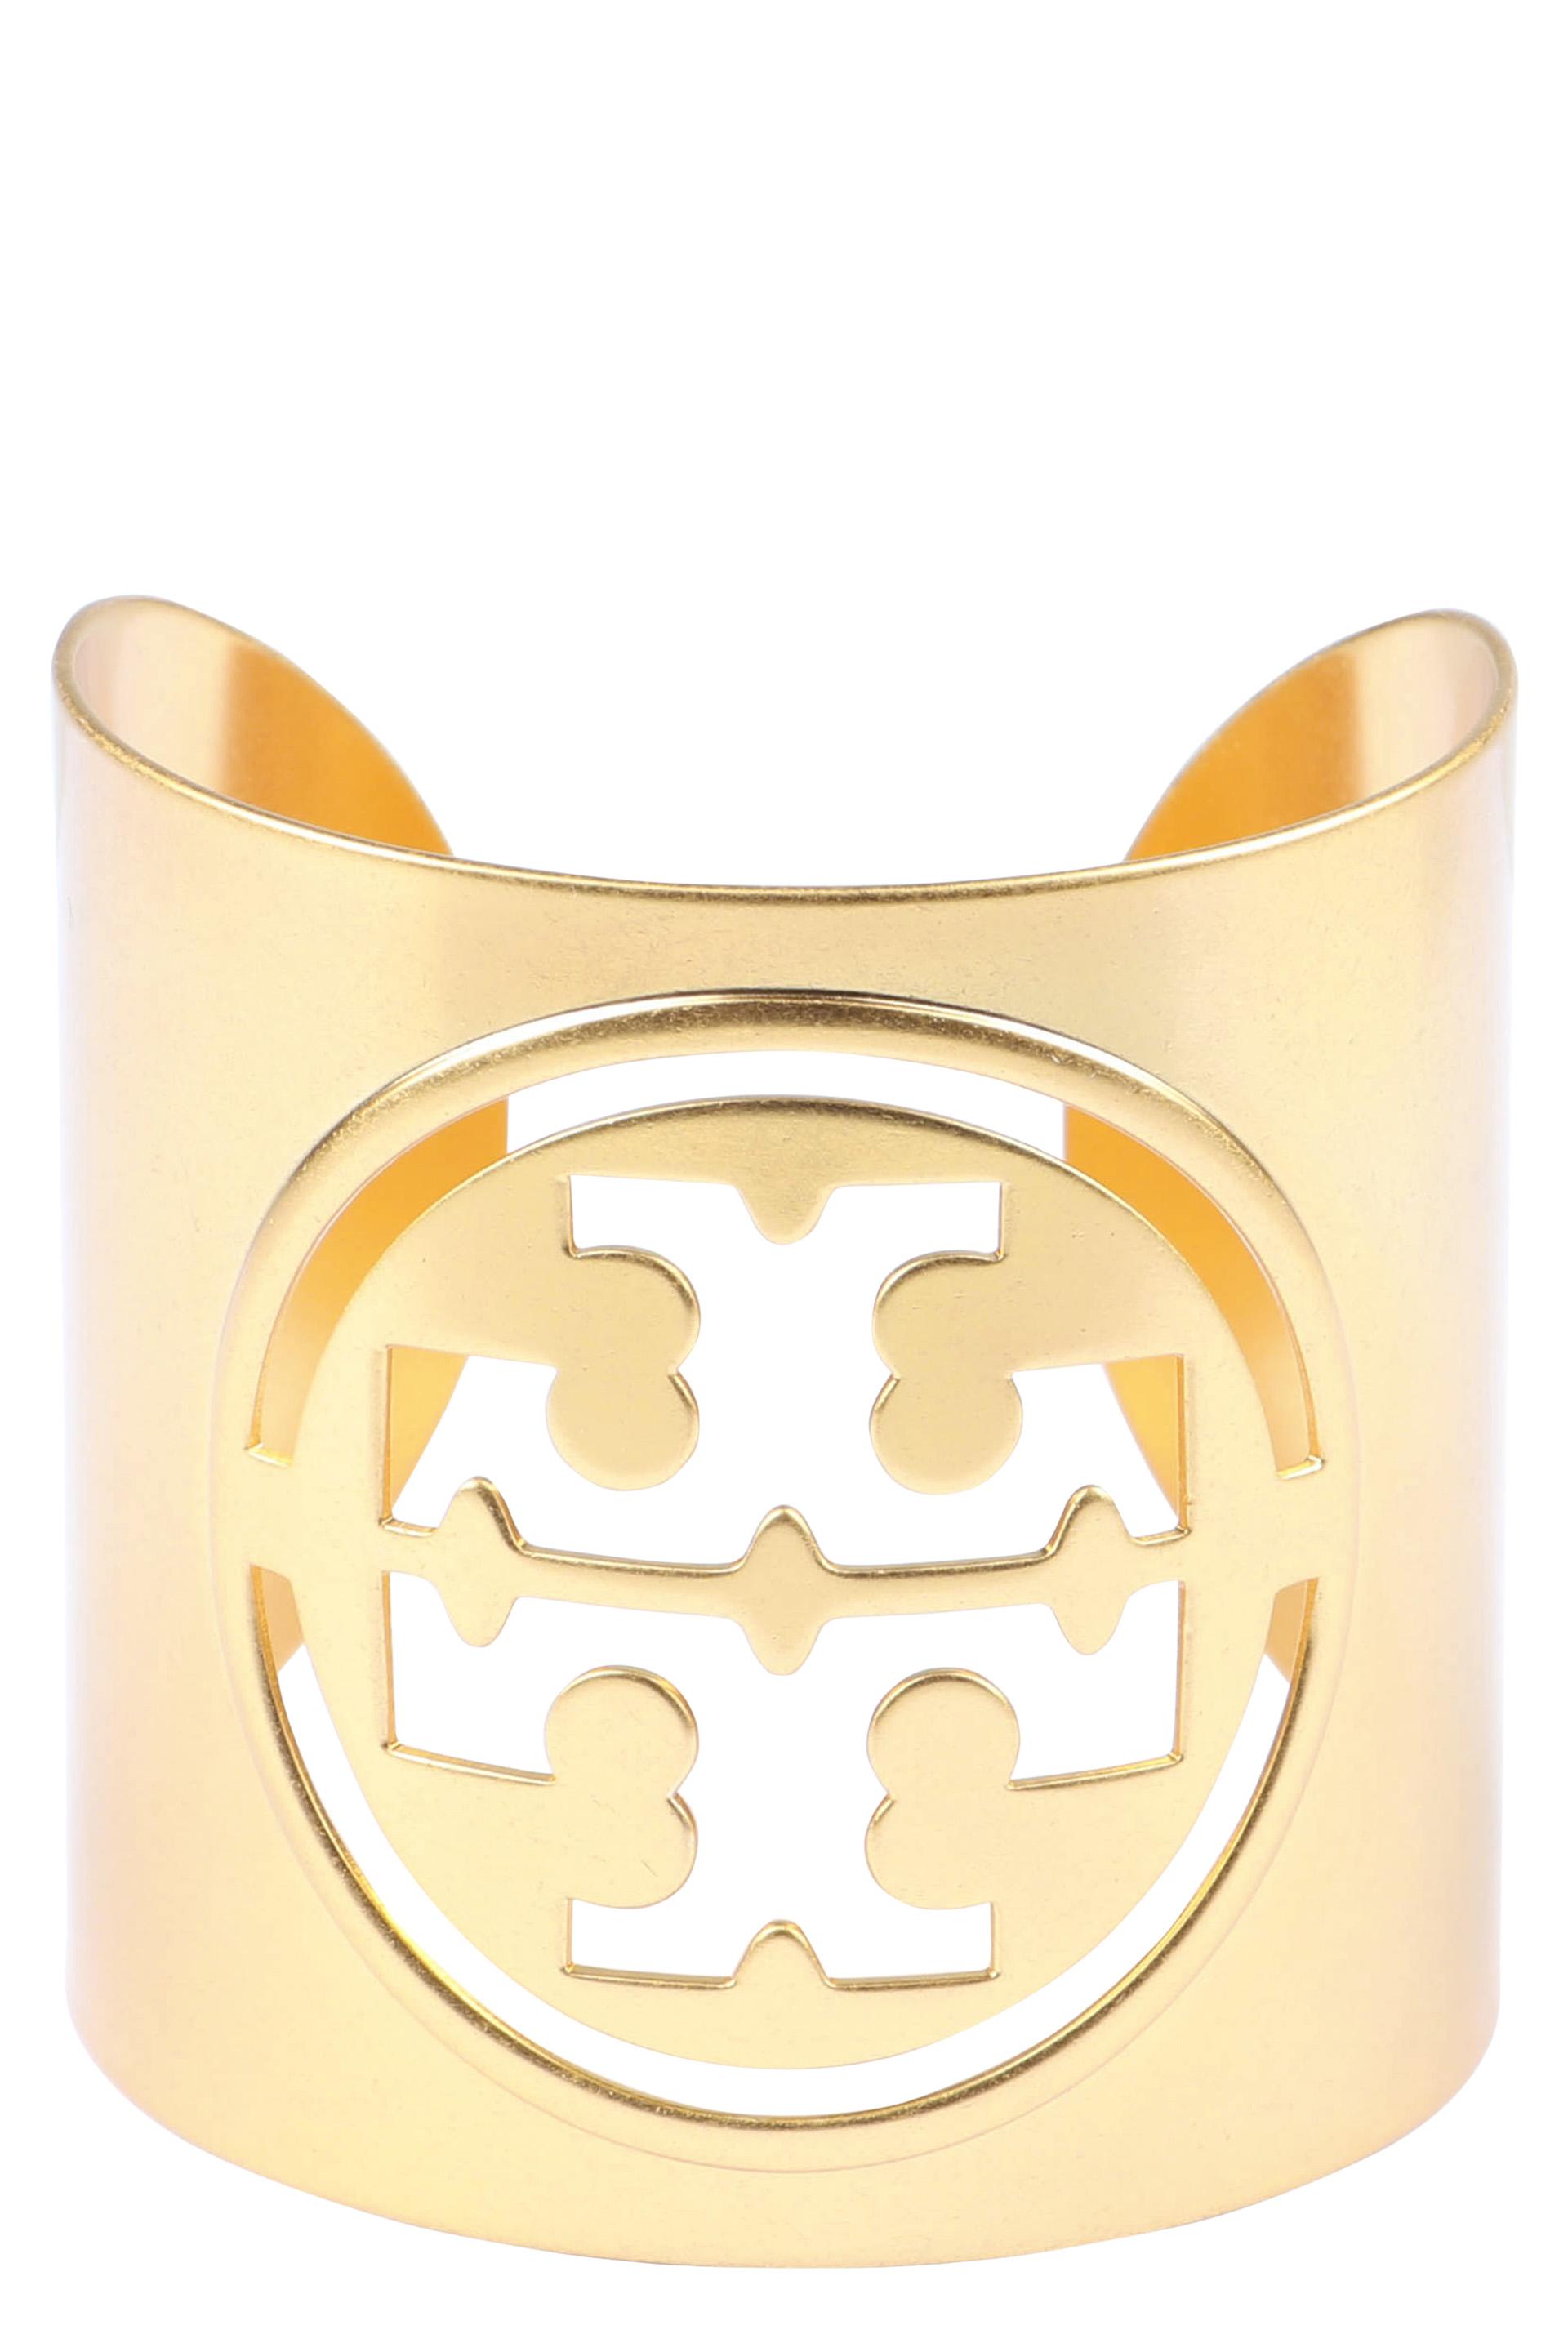 Tory Burch Miller Logo Detail Brass Cuff Bracelet in Metallic | Lyst